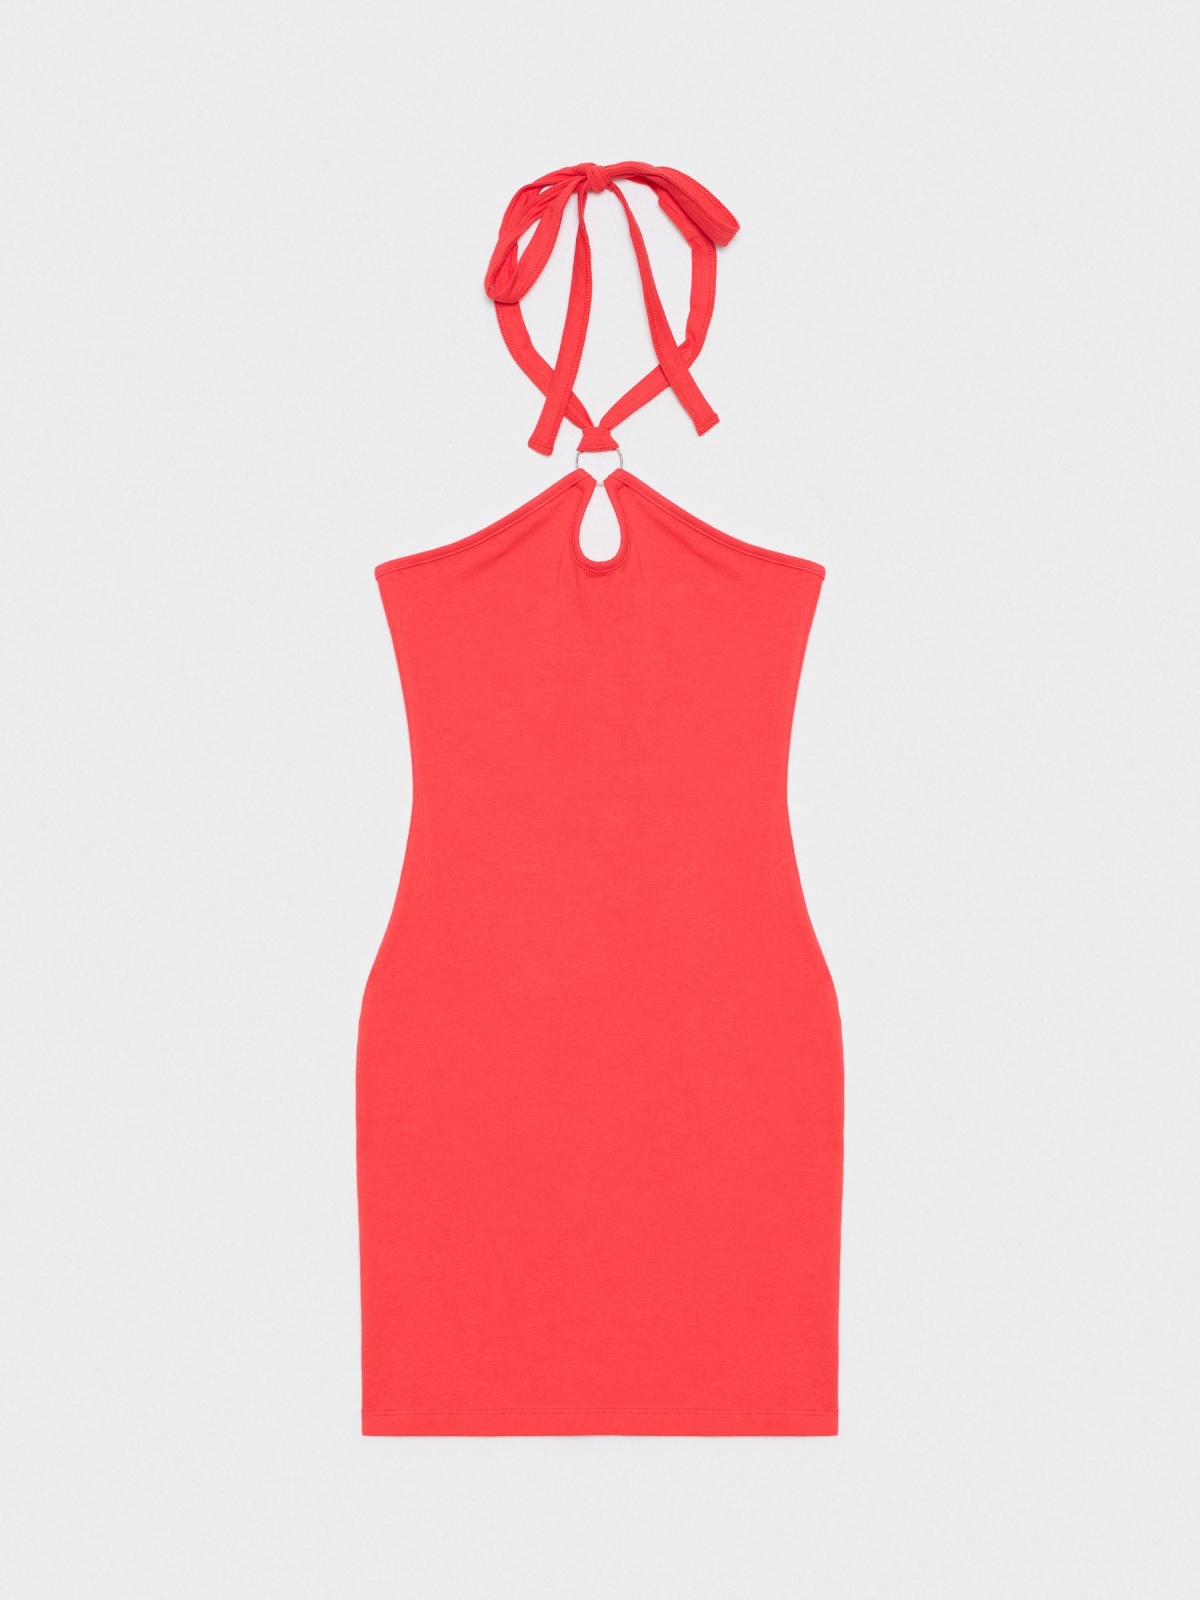  Red mini halter dress red